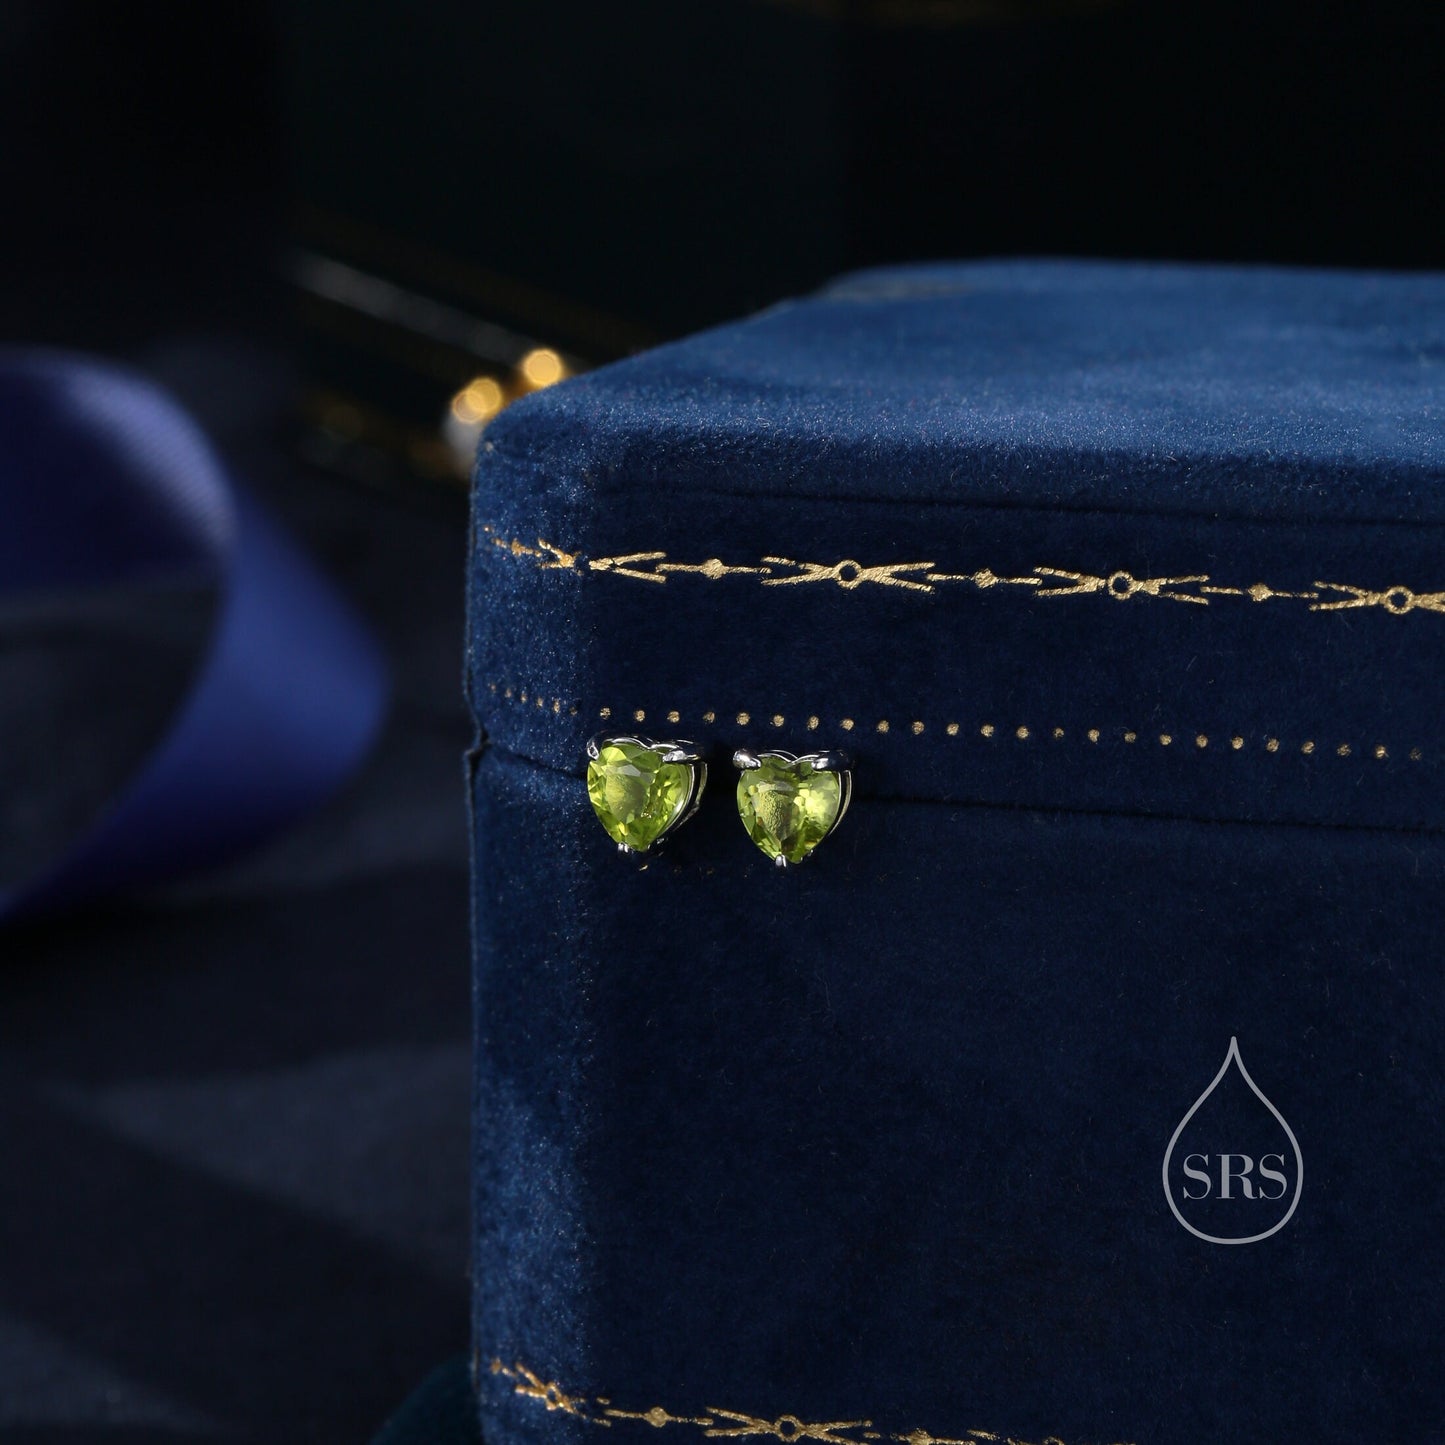 Natural Peridot Stone Heart Stud Earrings in Sterling Silver - 5mm Genuine Peridot Crystal Stud Earrings  - Semi Precious Gemstone